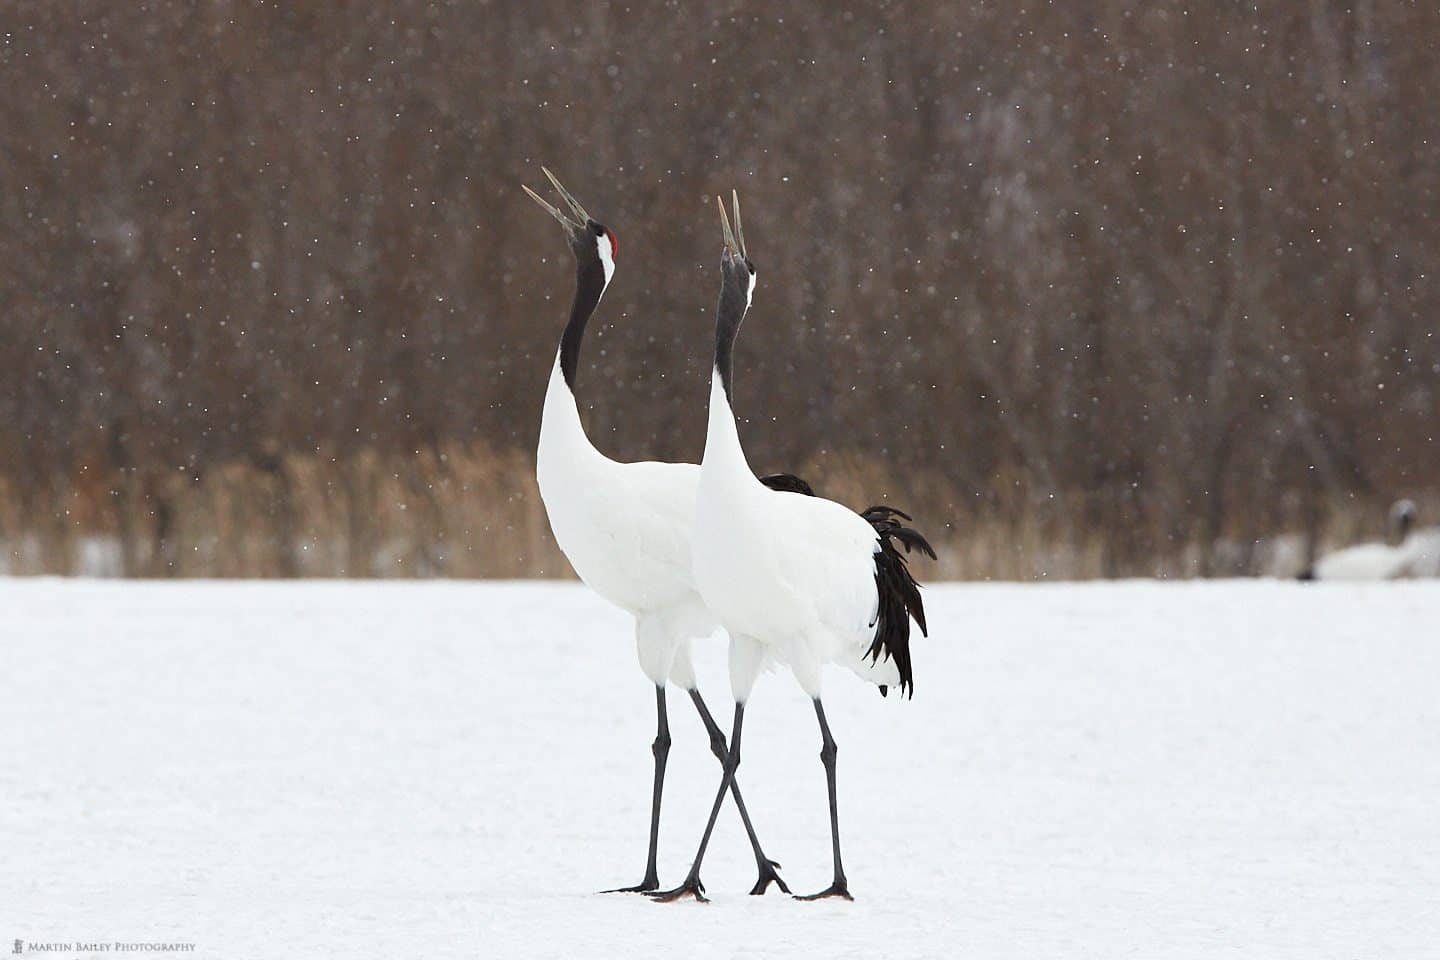 Cranes Singing in Snow